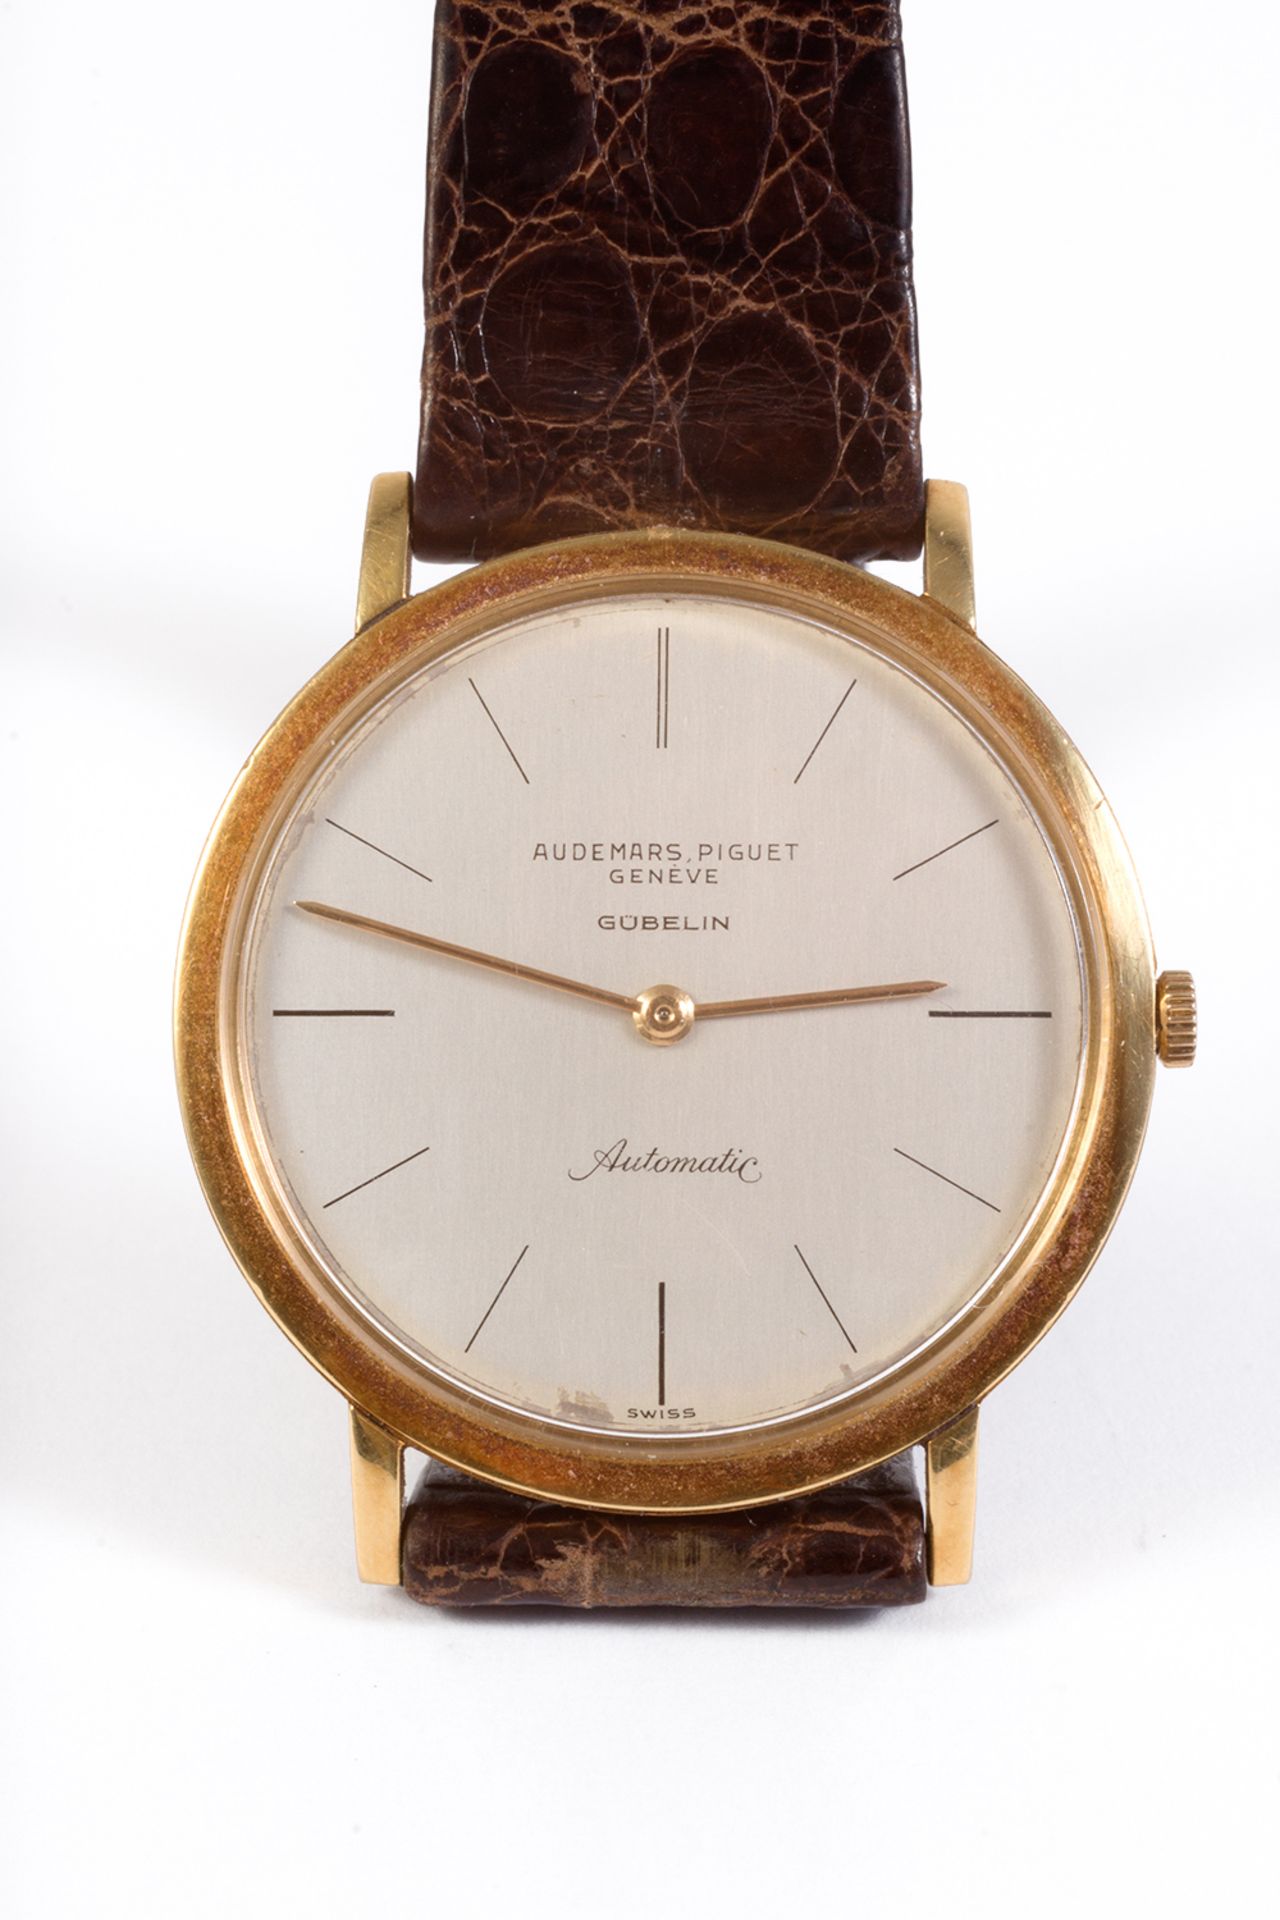 Audemars Piguet wristwatch, Gübelin model, in gold and leather strap. Automatic movement. - Bild 4 aus 6